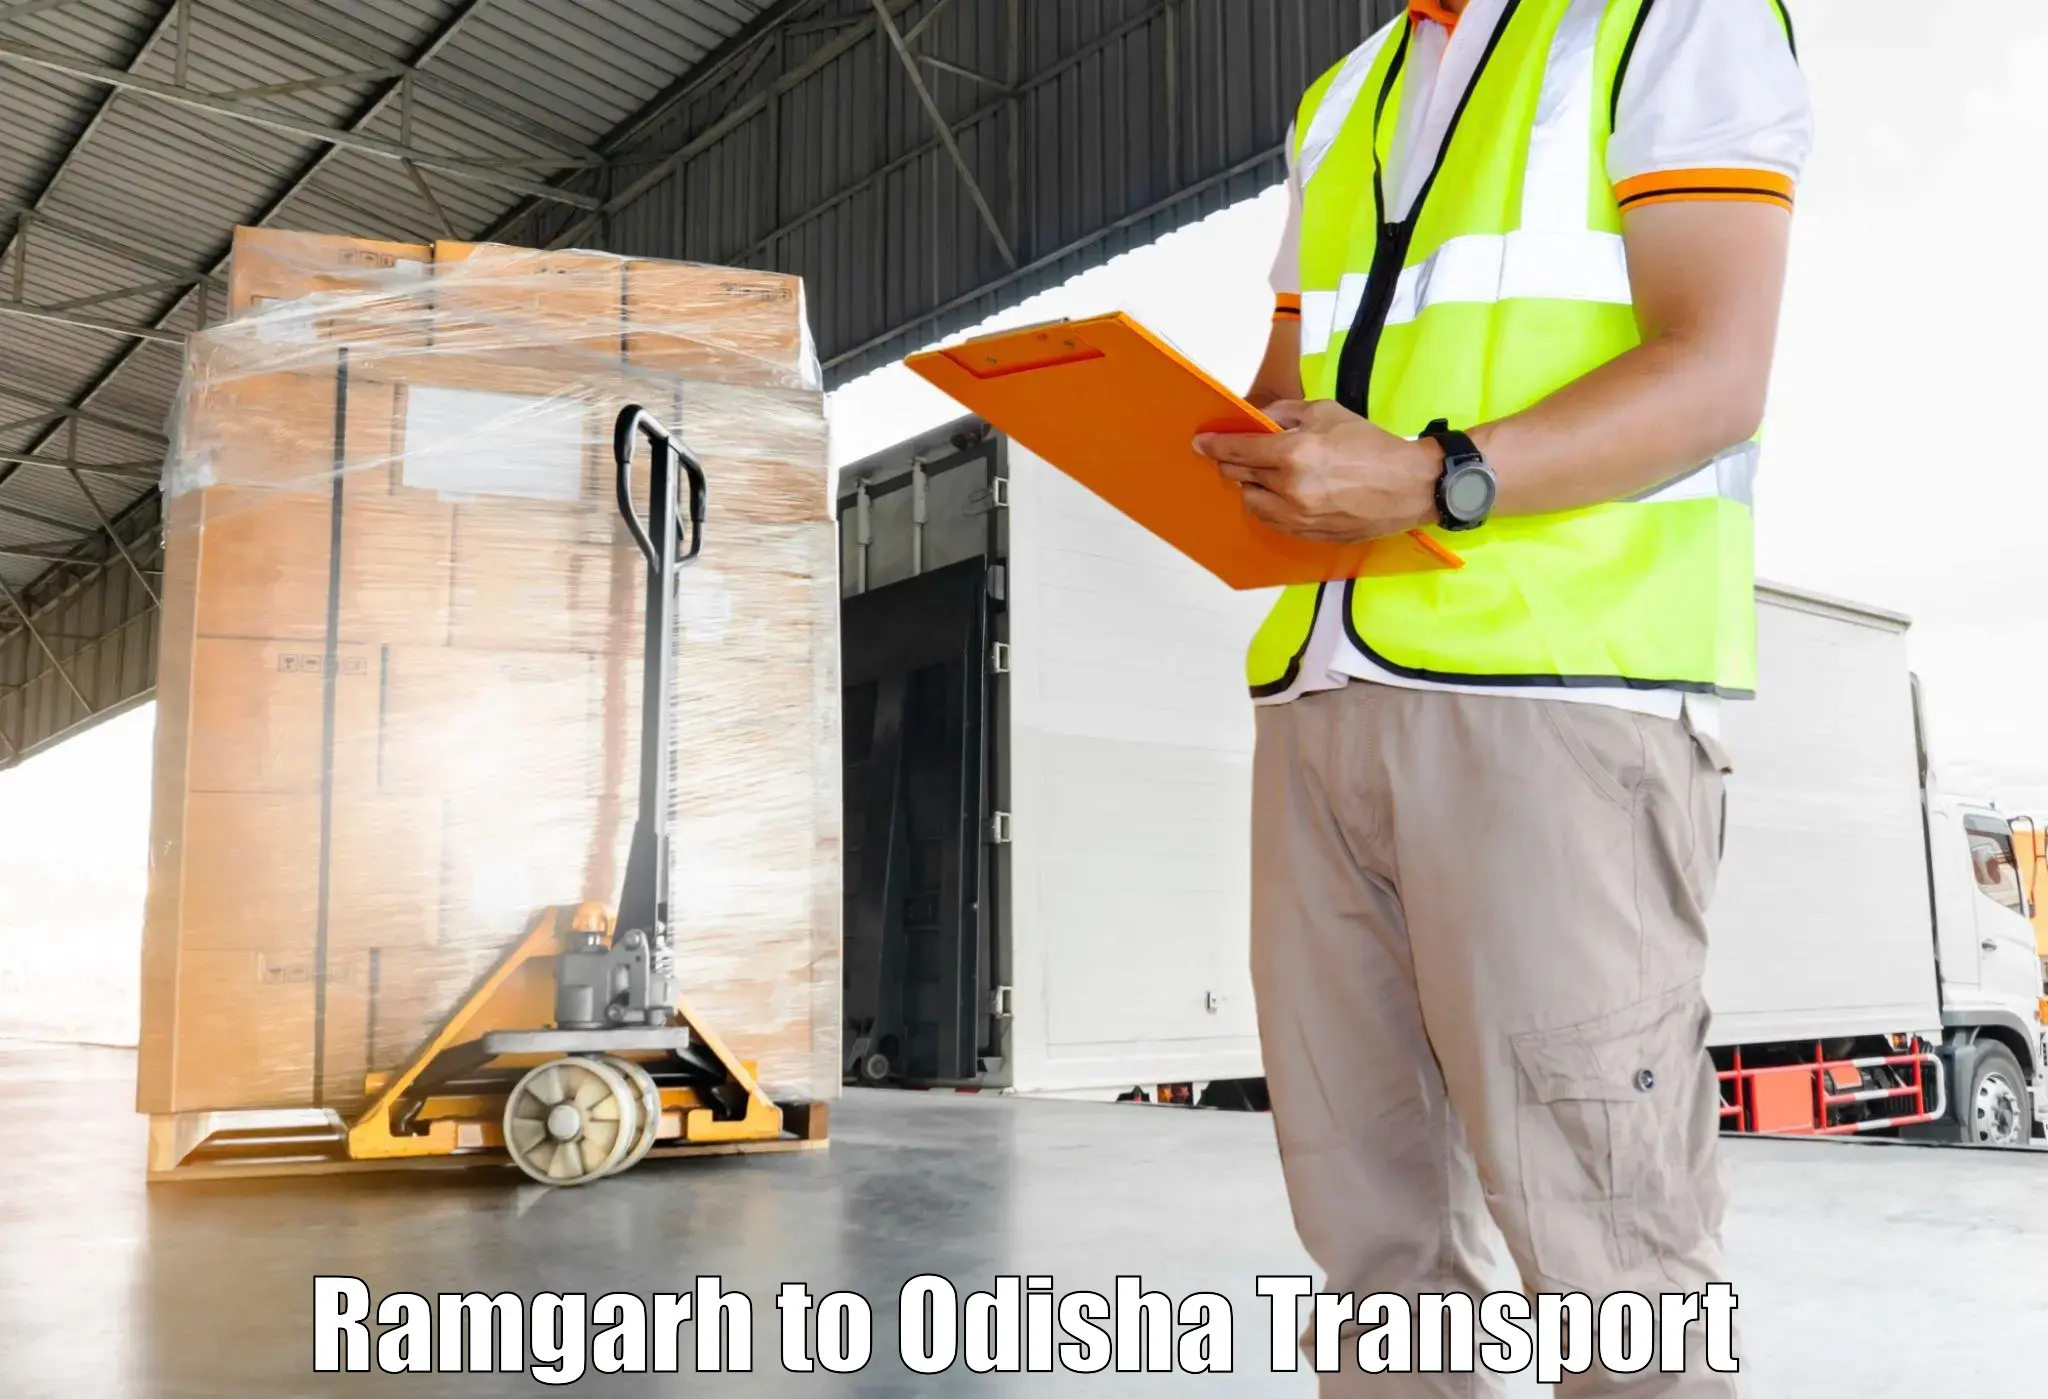 Truck transport companies in India Ramgarh to Narasinghpur